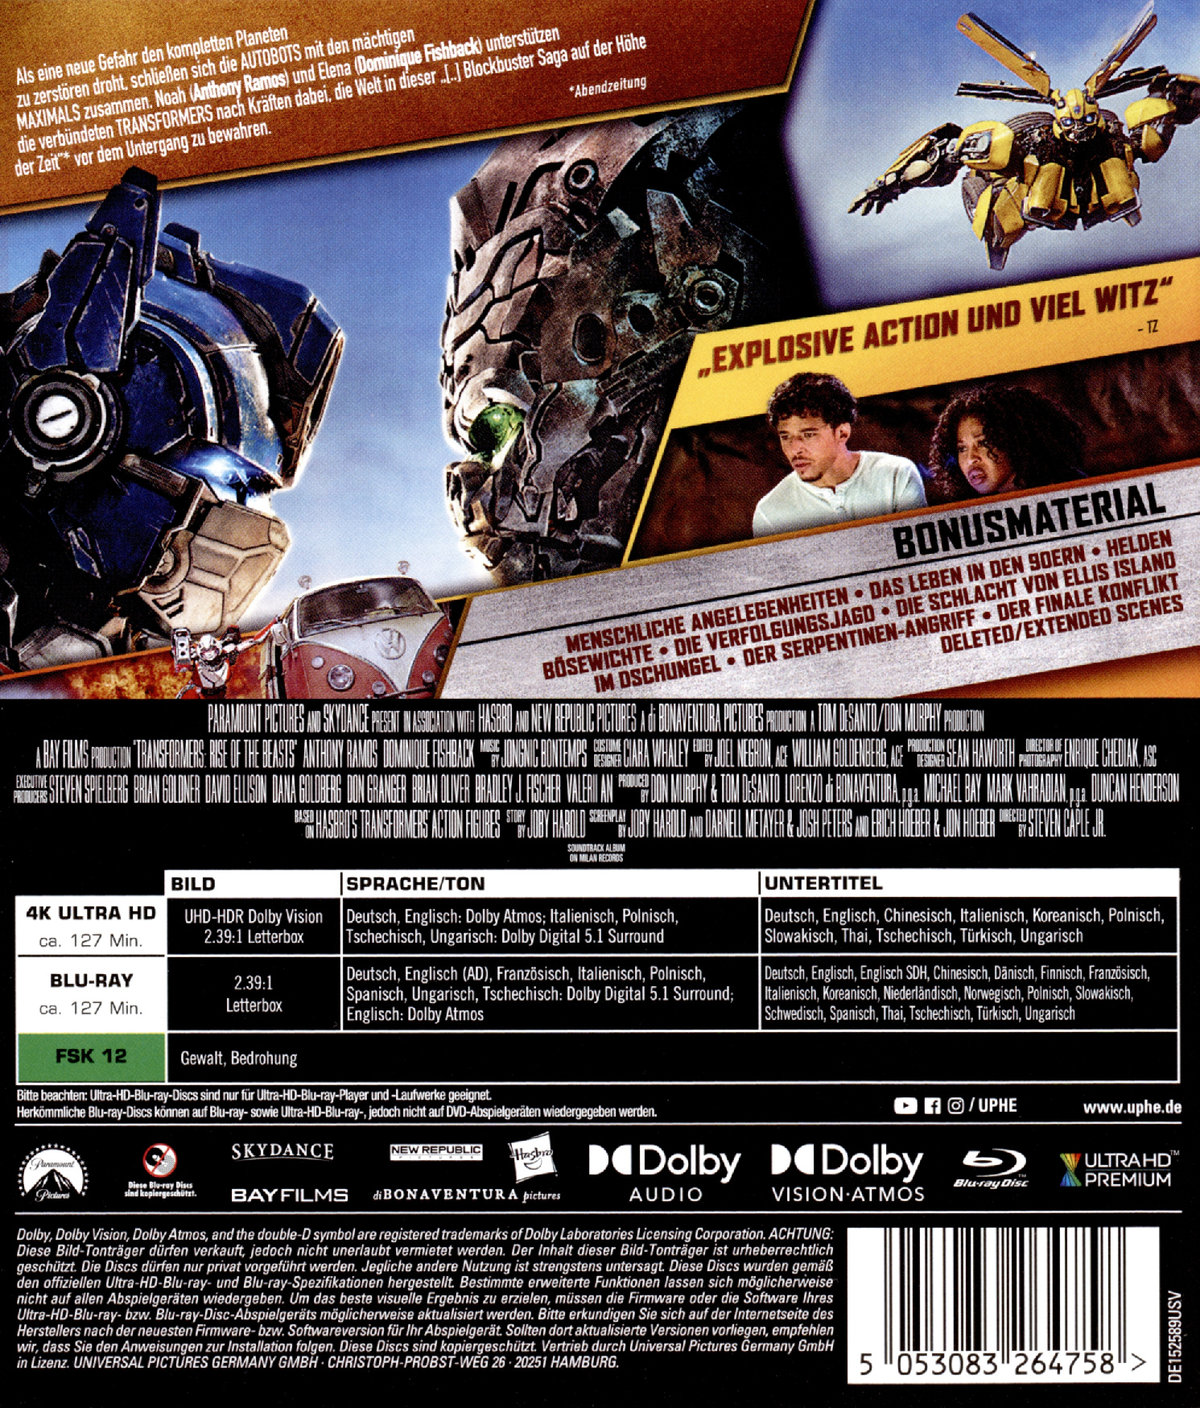 Transformers: Aufstieg der Bestien (4K Ultra HD+blu-ray)